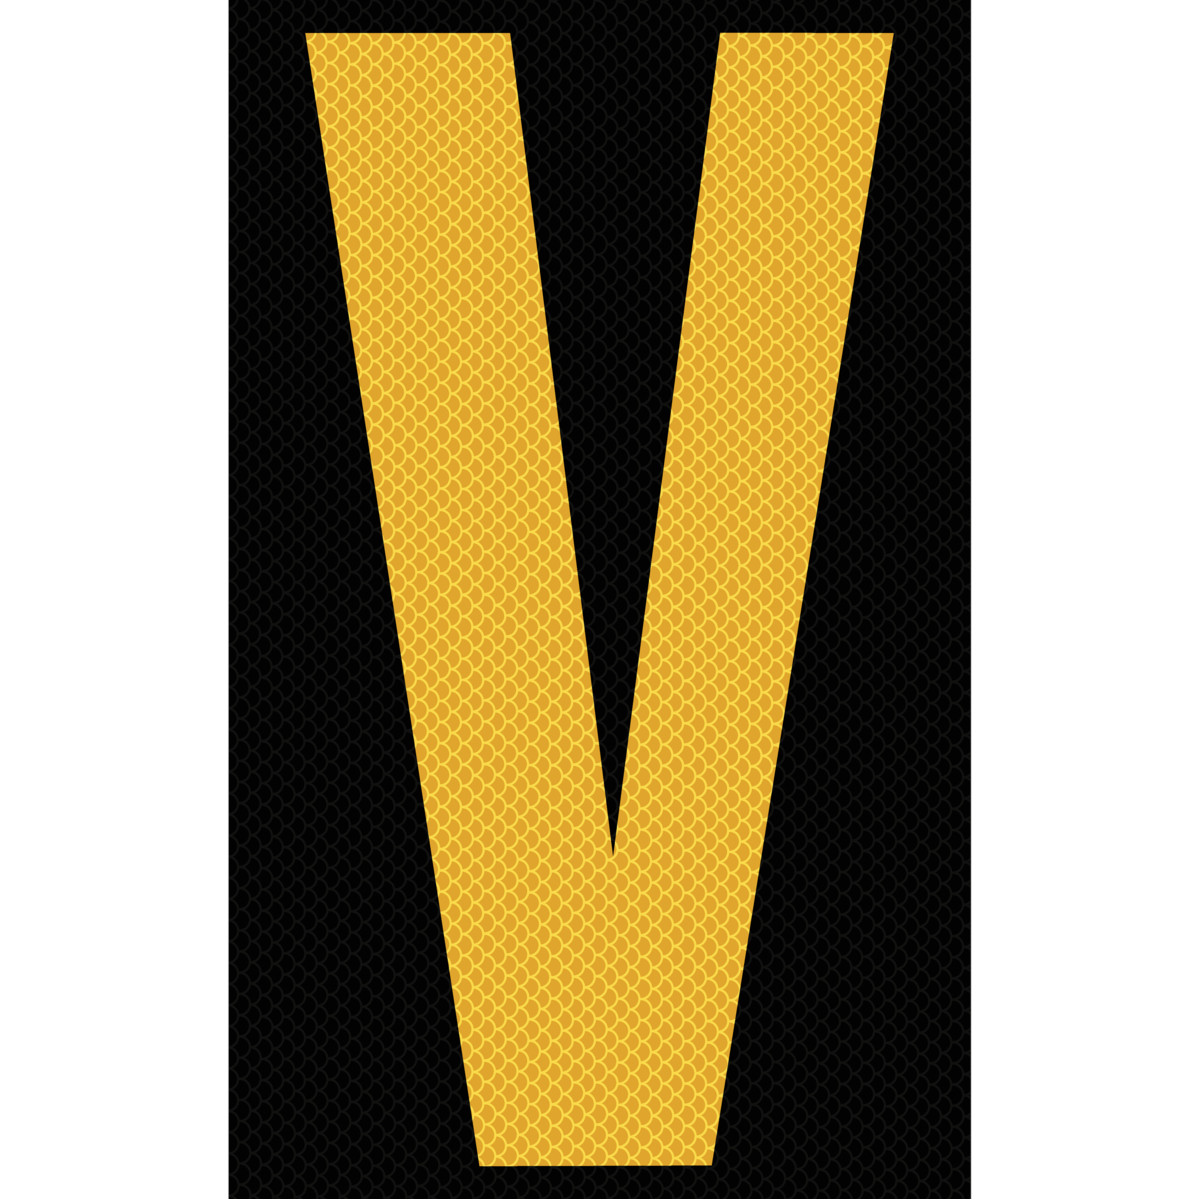 3" Yellow on Black High Intensity Reflective "V"